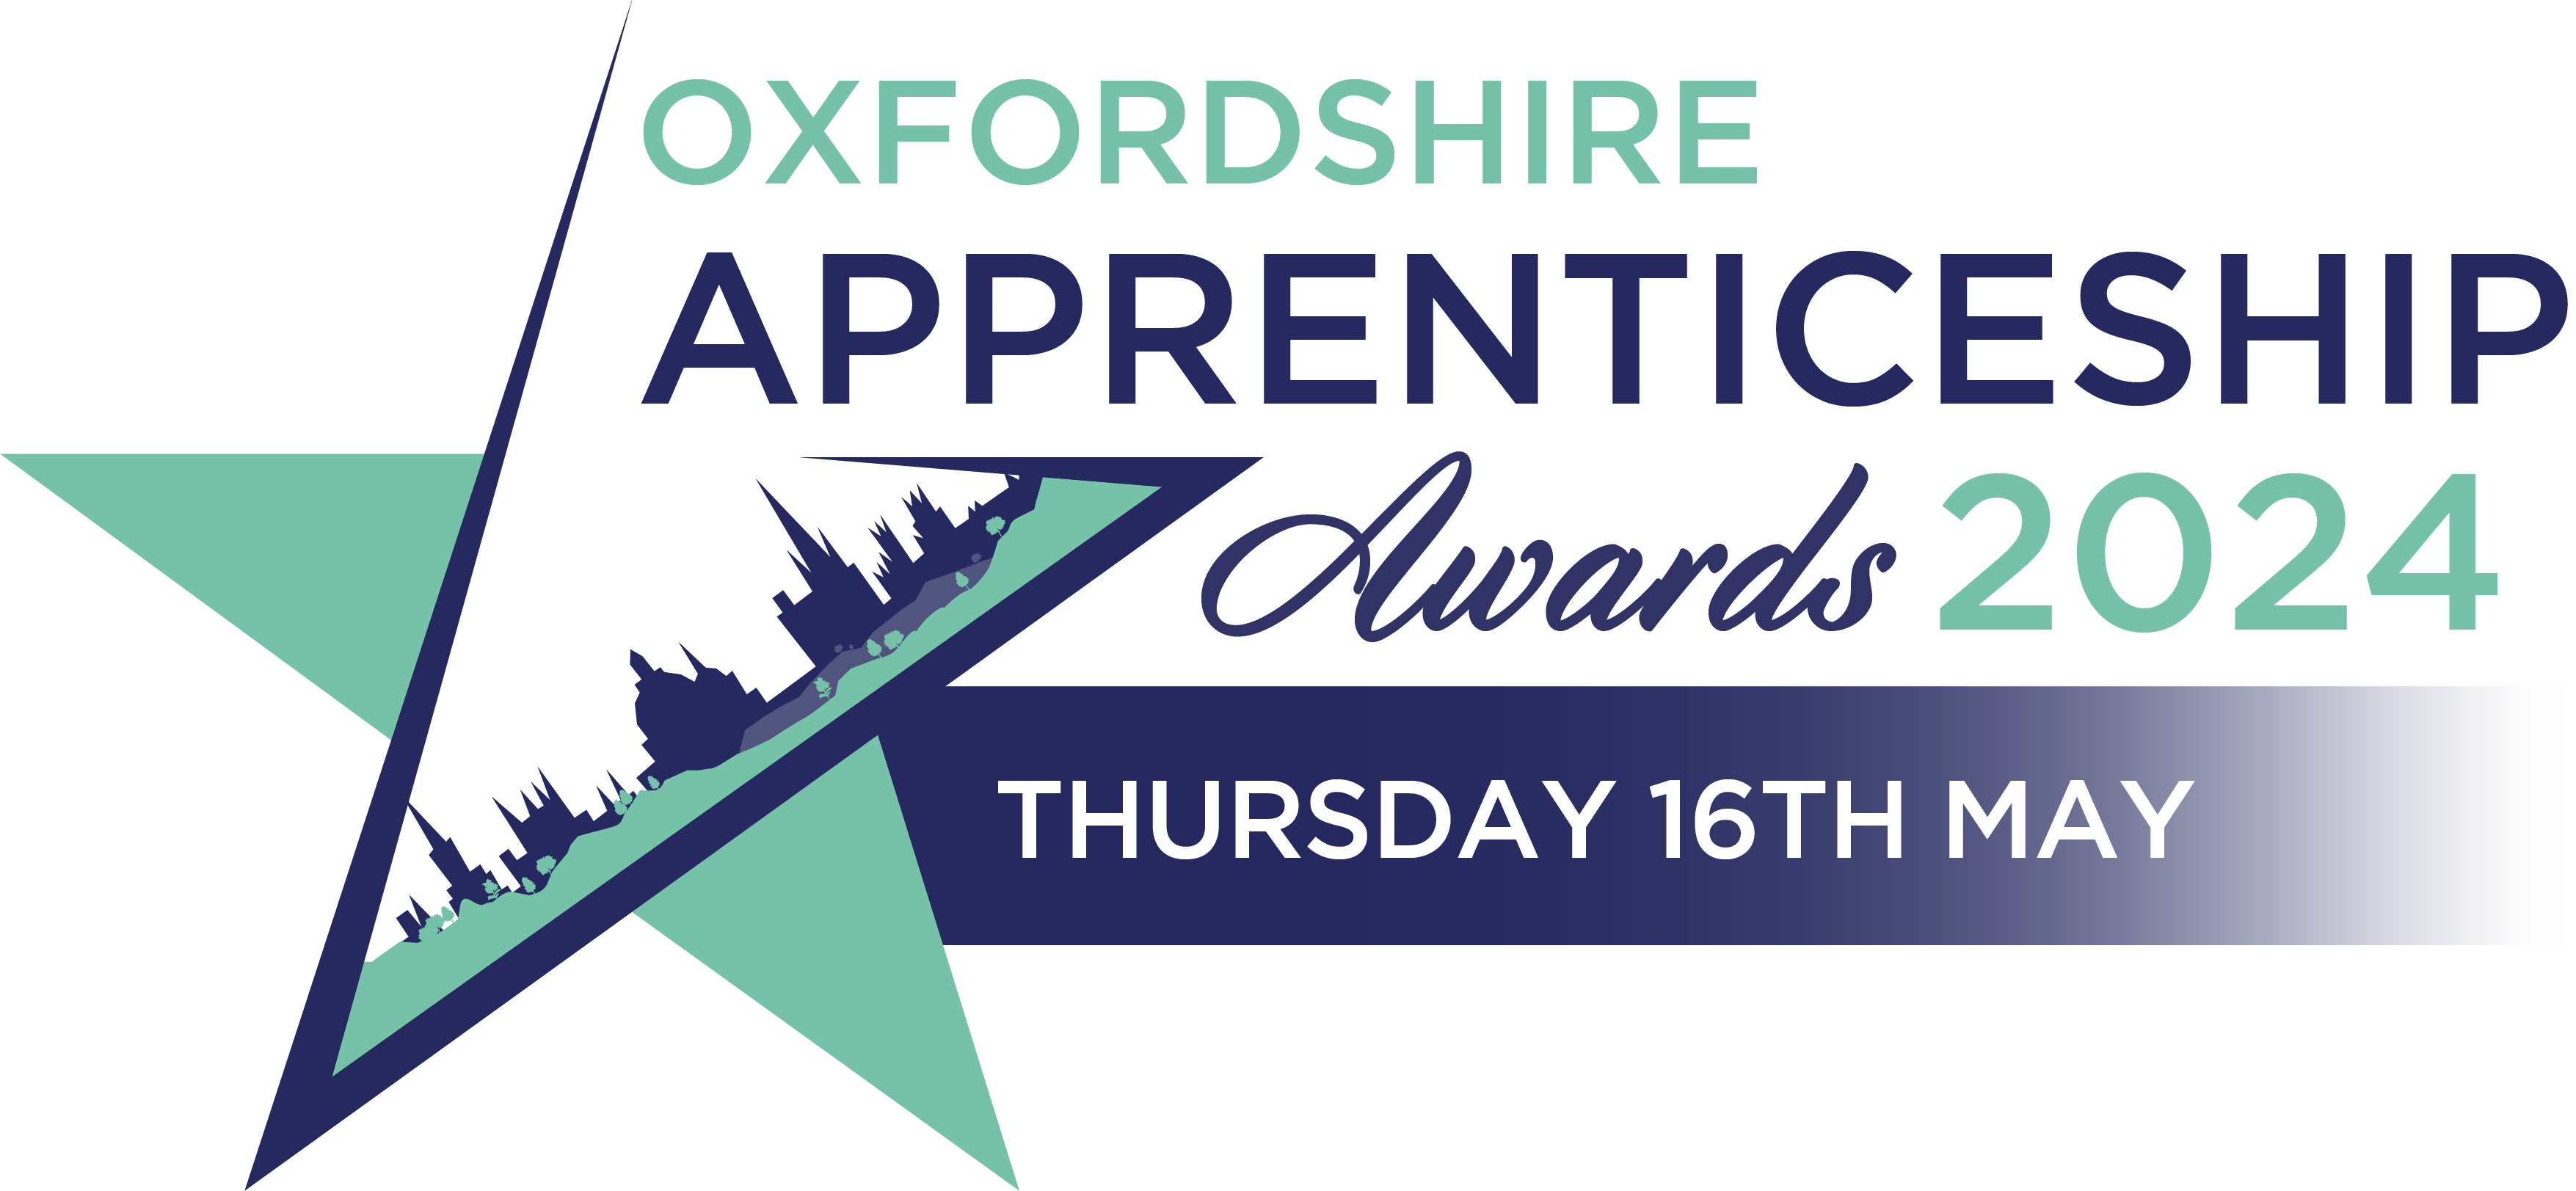 Oxfordshire Apprenticeship AWards 2024 logo